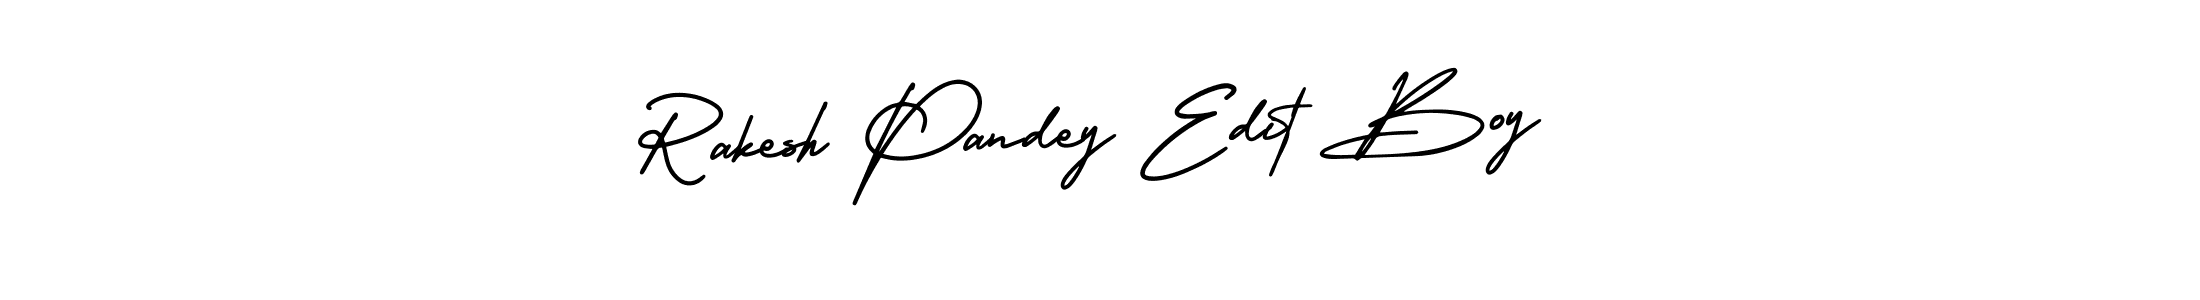 Best and Professional Signature Style for Rakesh Pandey Edit Boy. AmerikaSignatureDemo-Regular Best Signature Style Collection. Rakesh Pandey Edit Boy signature style 3 images and pictures png